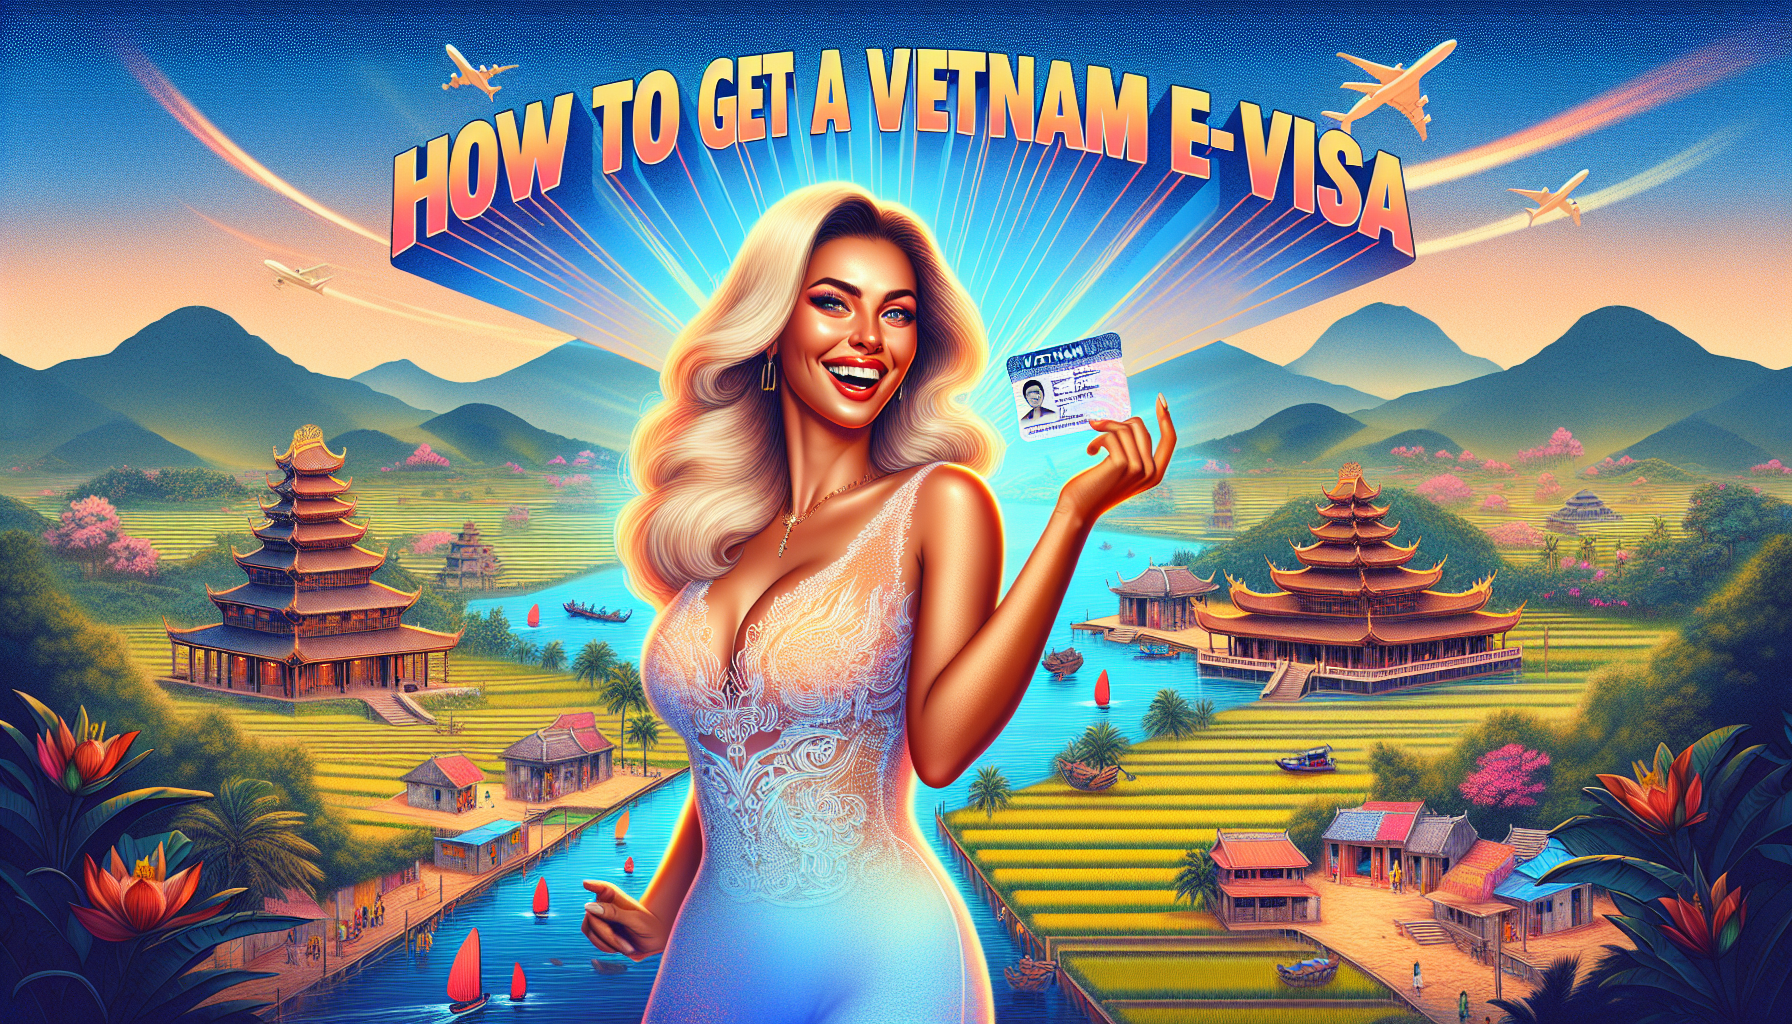 Vietnam Evisa for Citizens from Saint Lucia